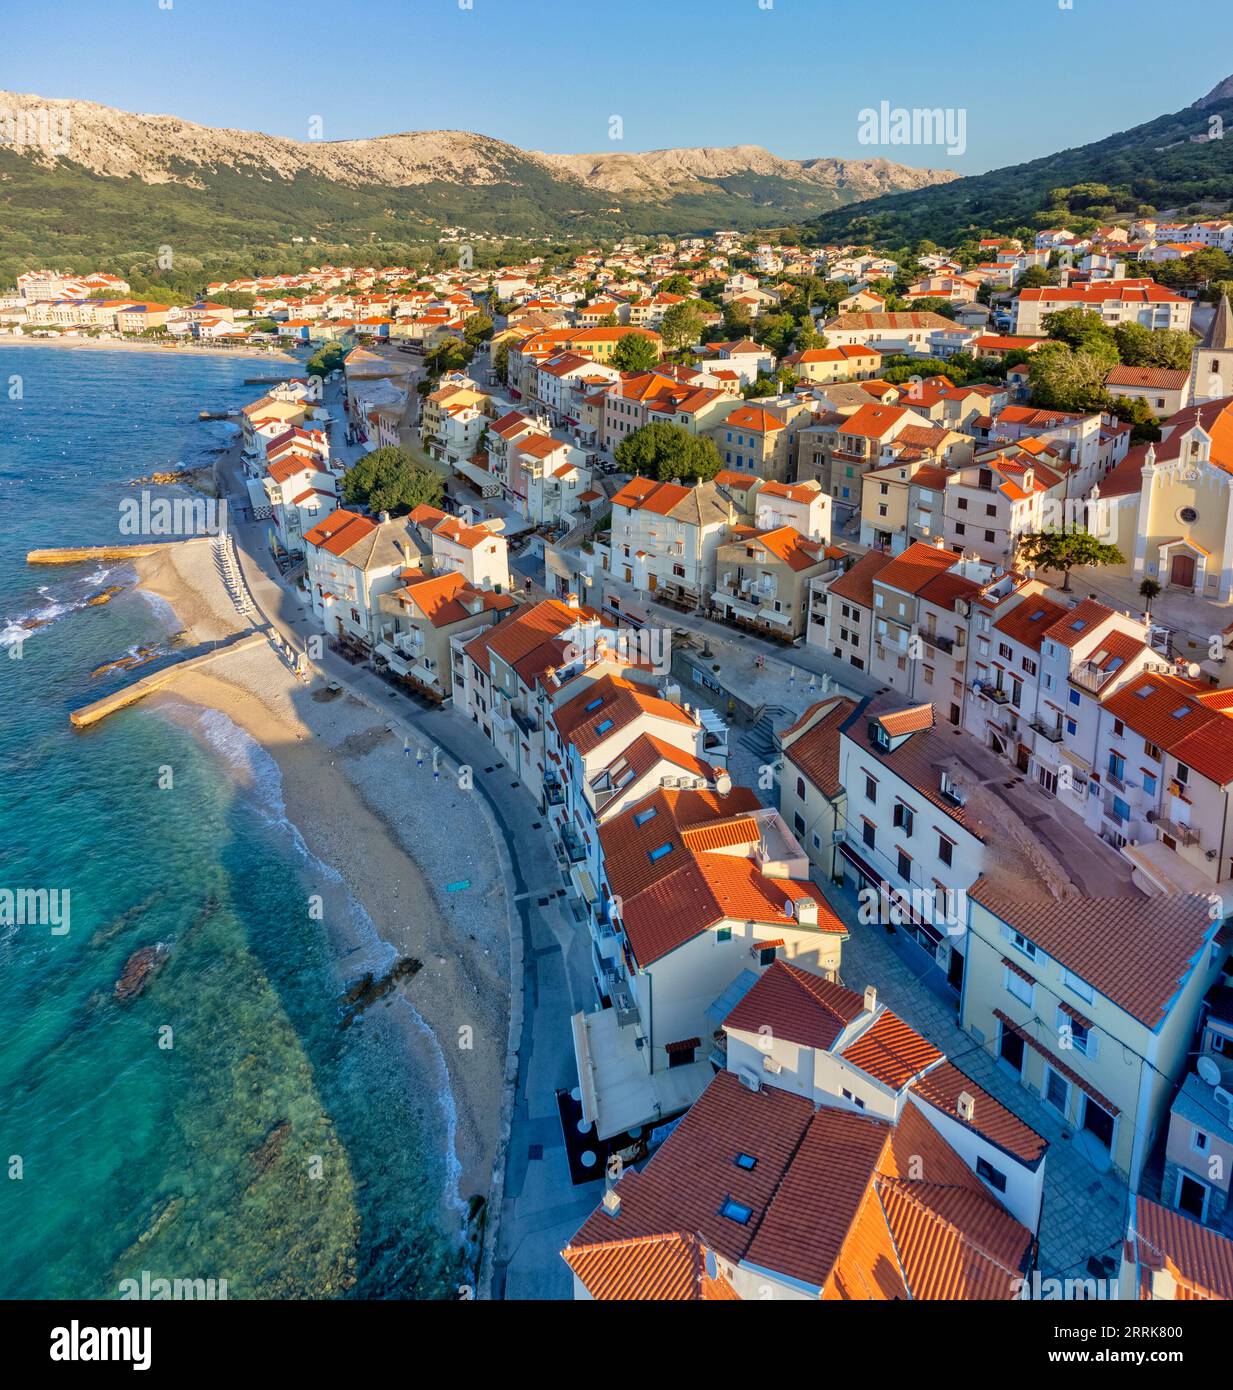 Croatia, Kvarner bay, Primorje Gorski Kotar County, island of Krk, view of Baska, tourist resort on the Adriatic sea Stock Photo